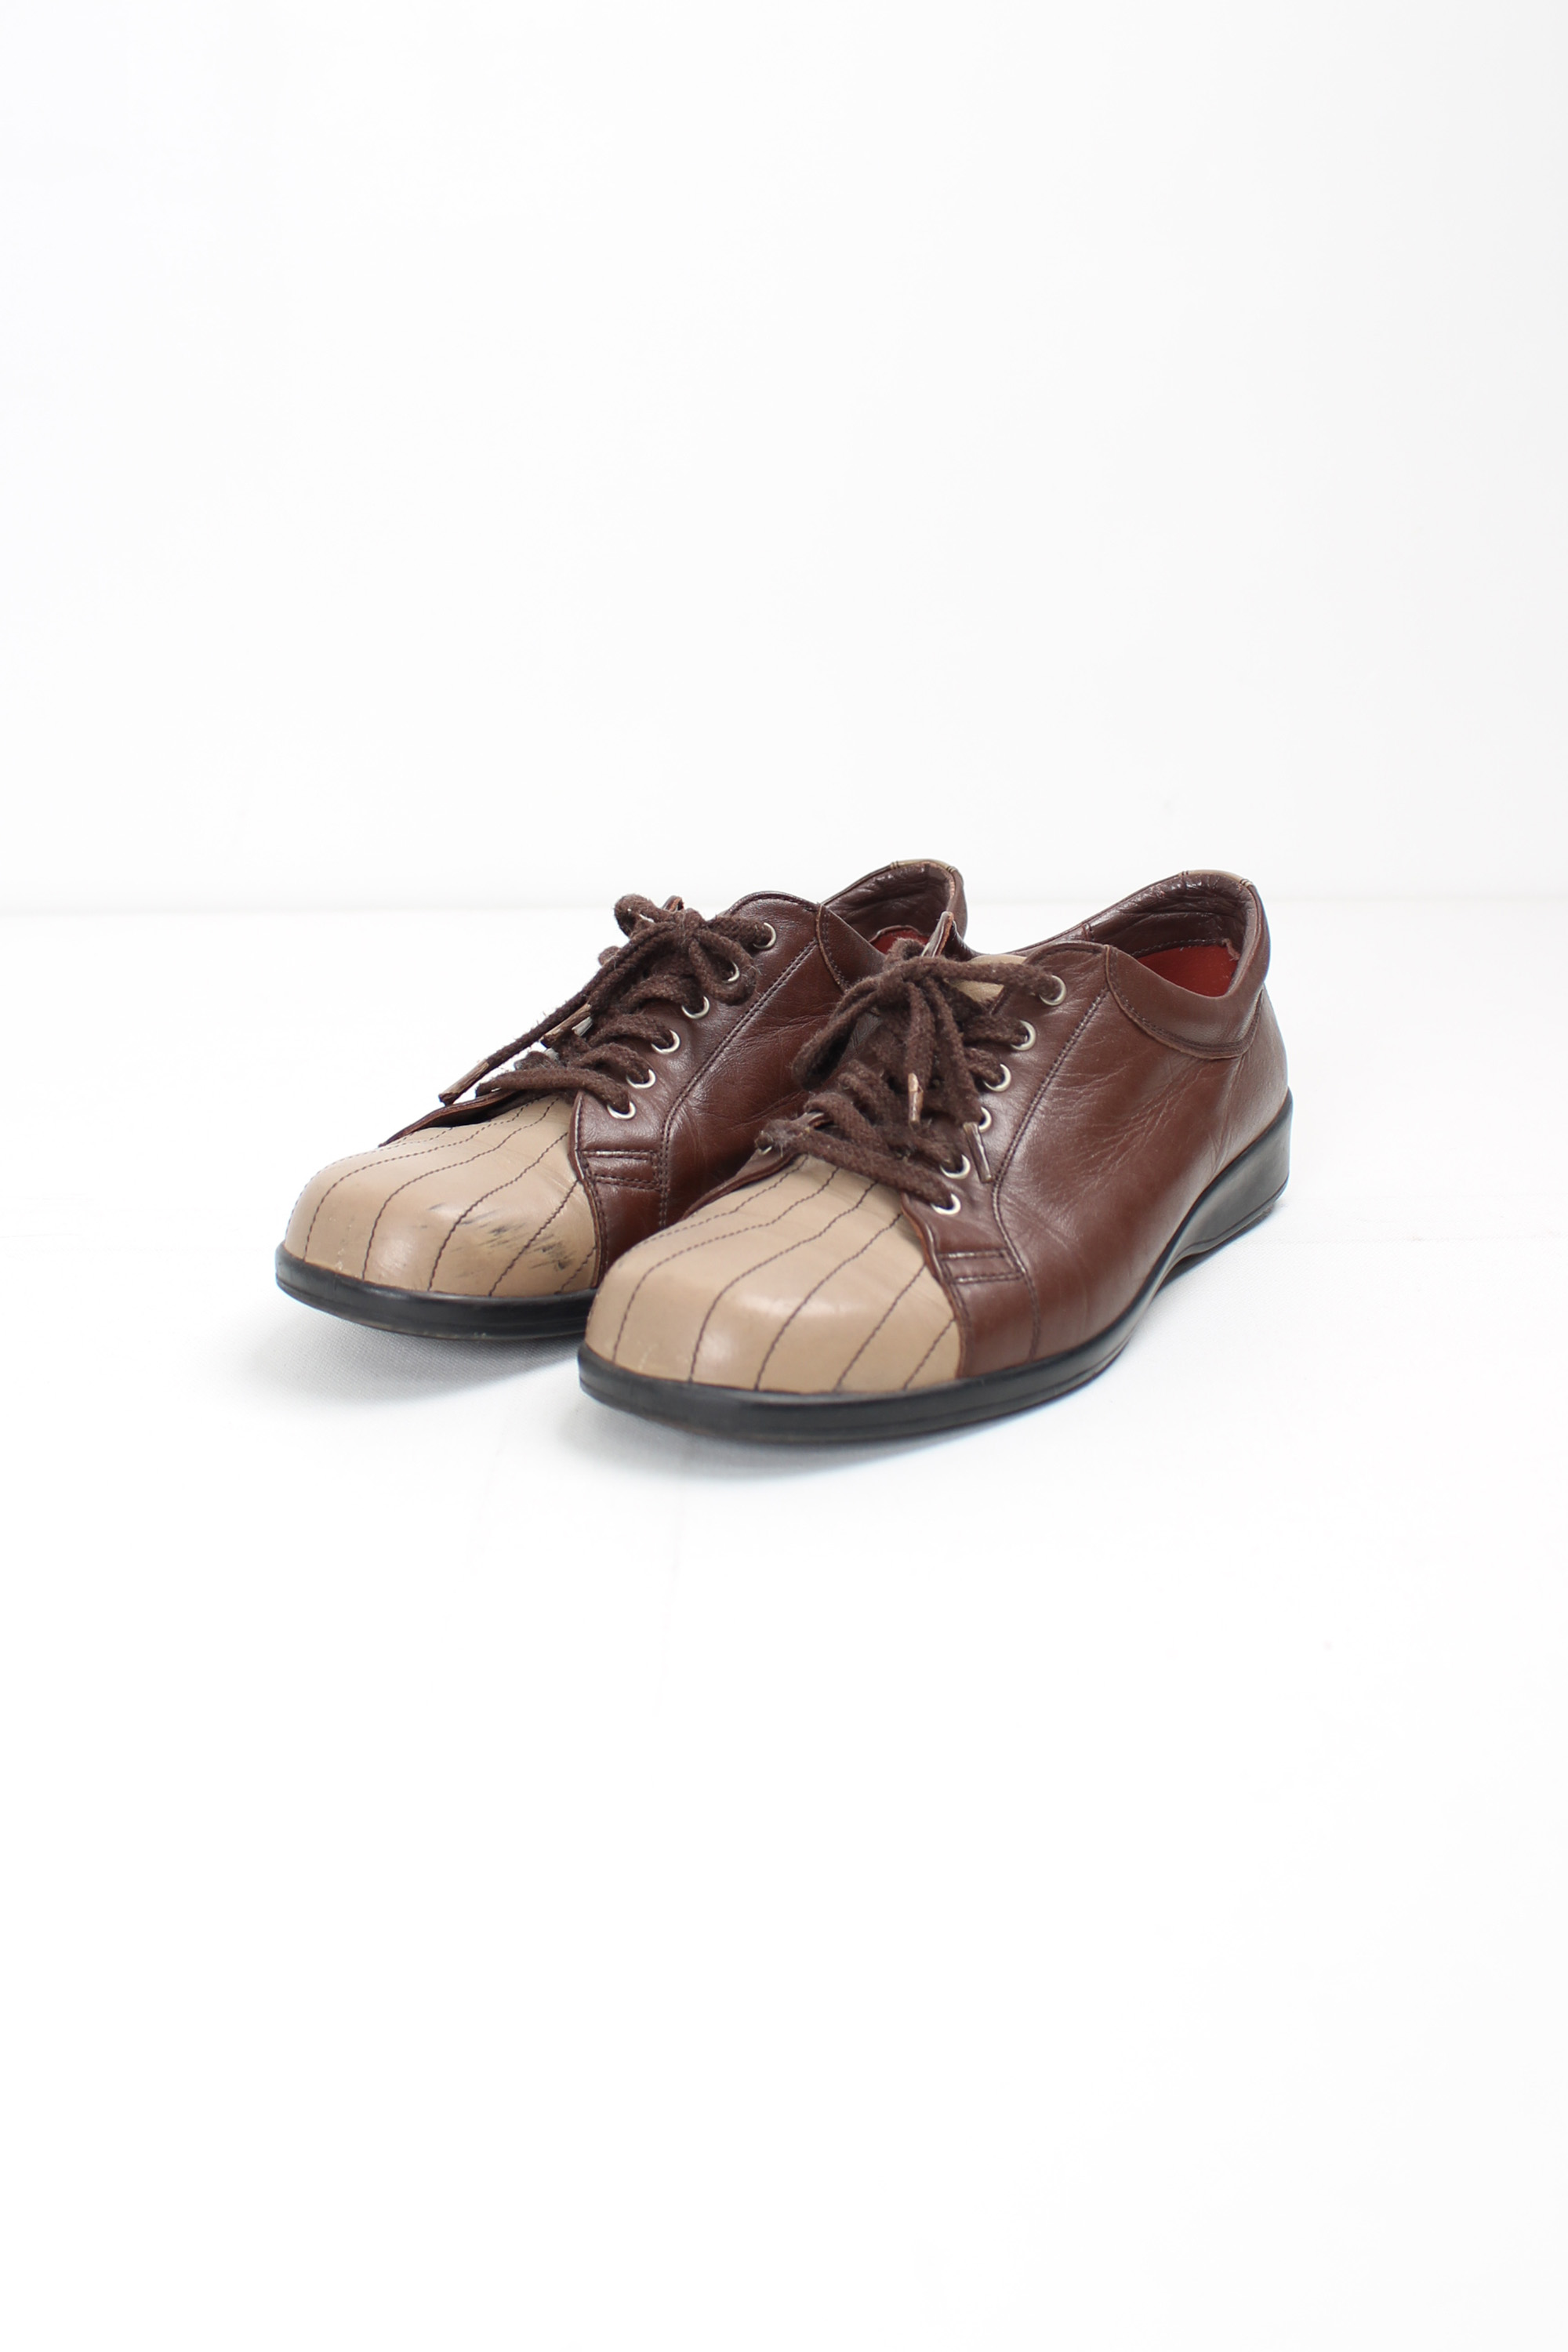 vintage leather shoes